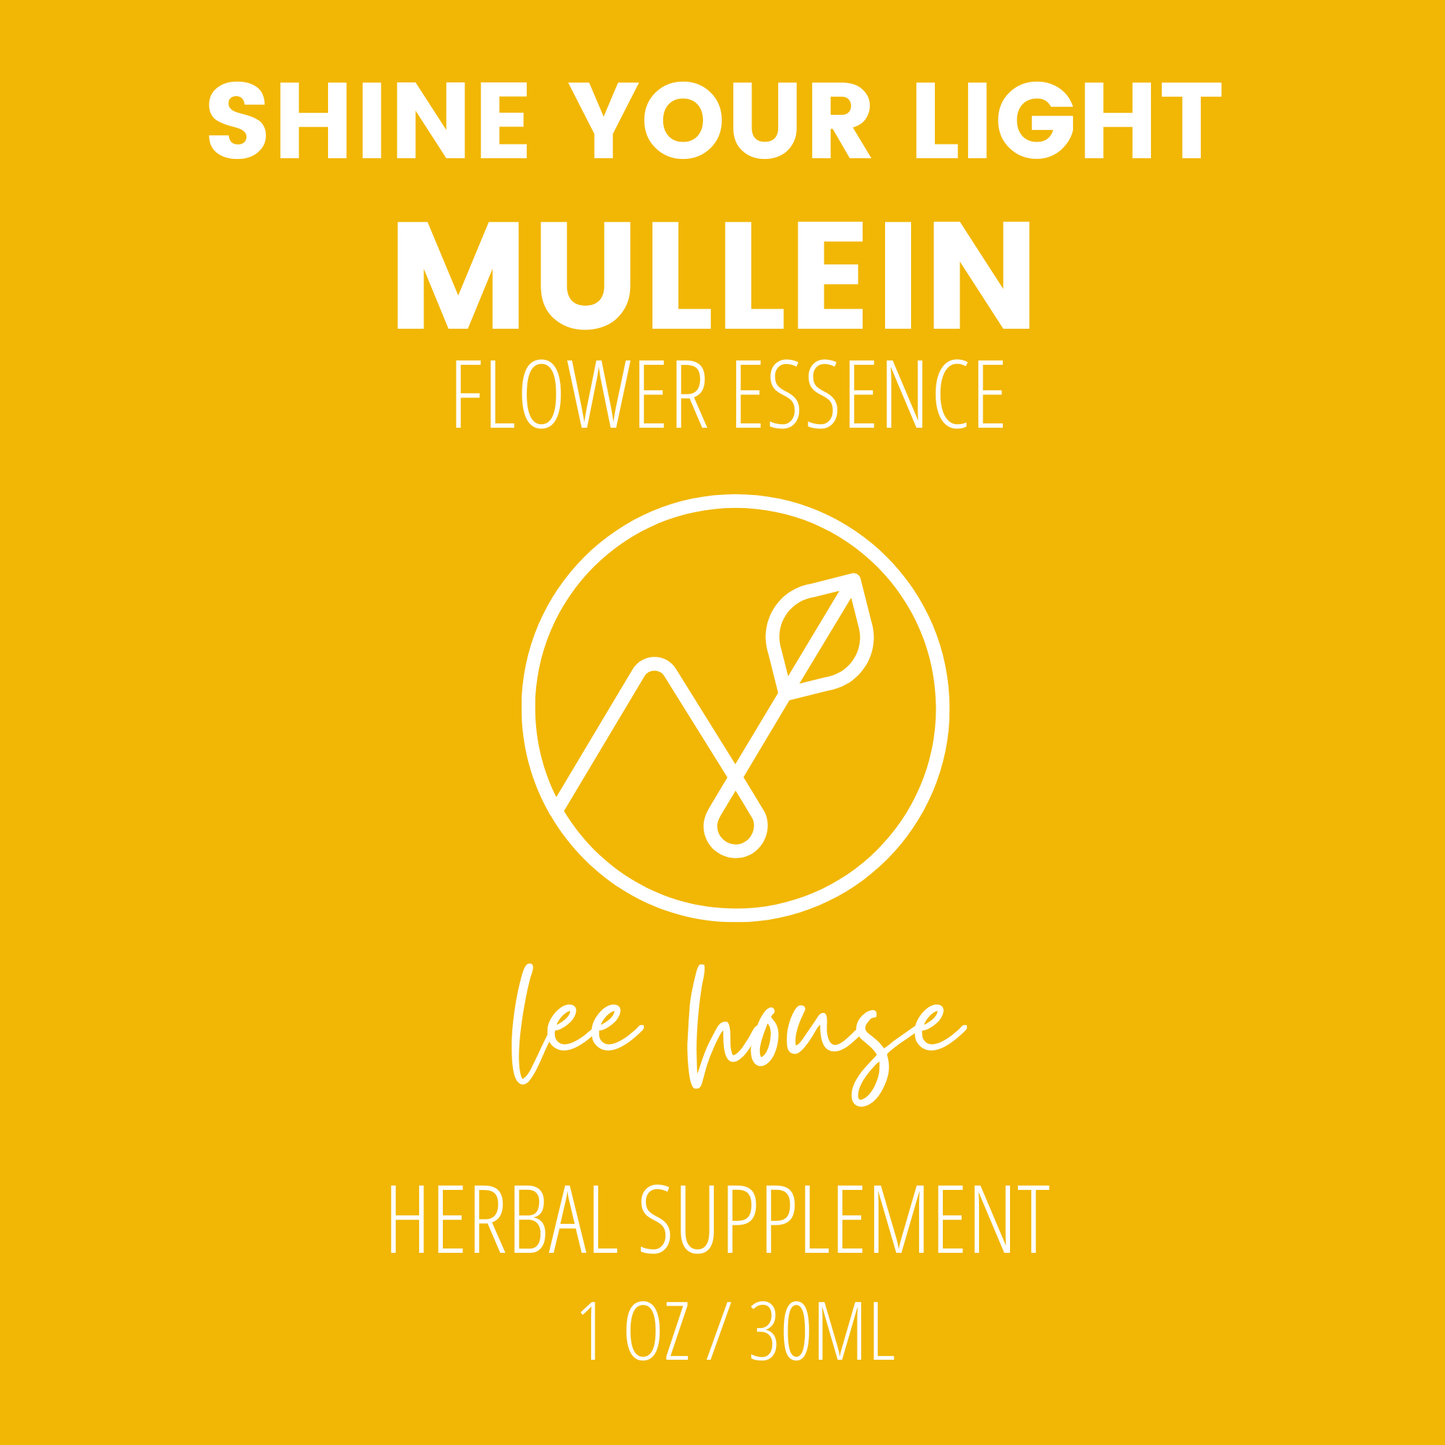 Shine Your Light: Mullein Flower Essence